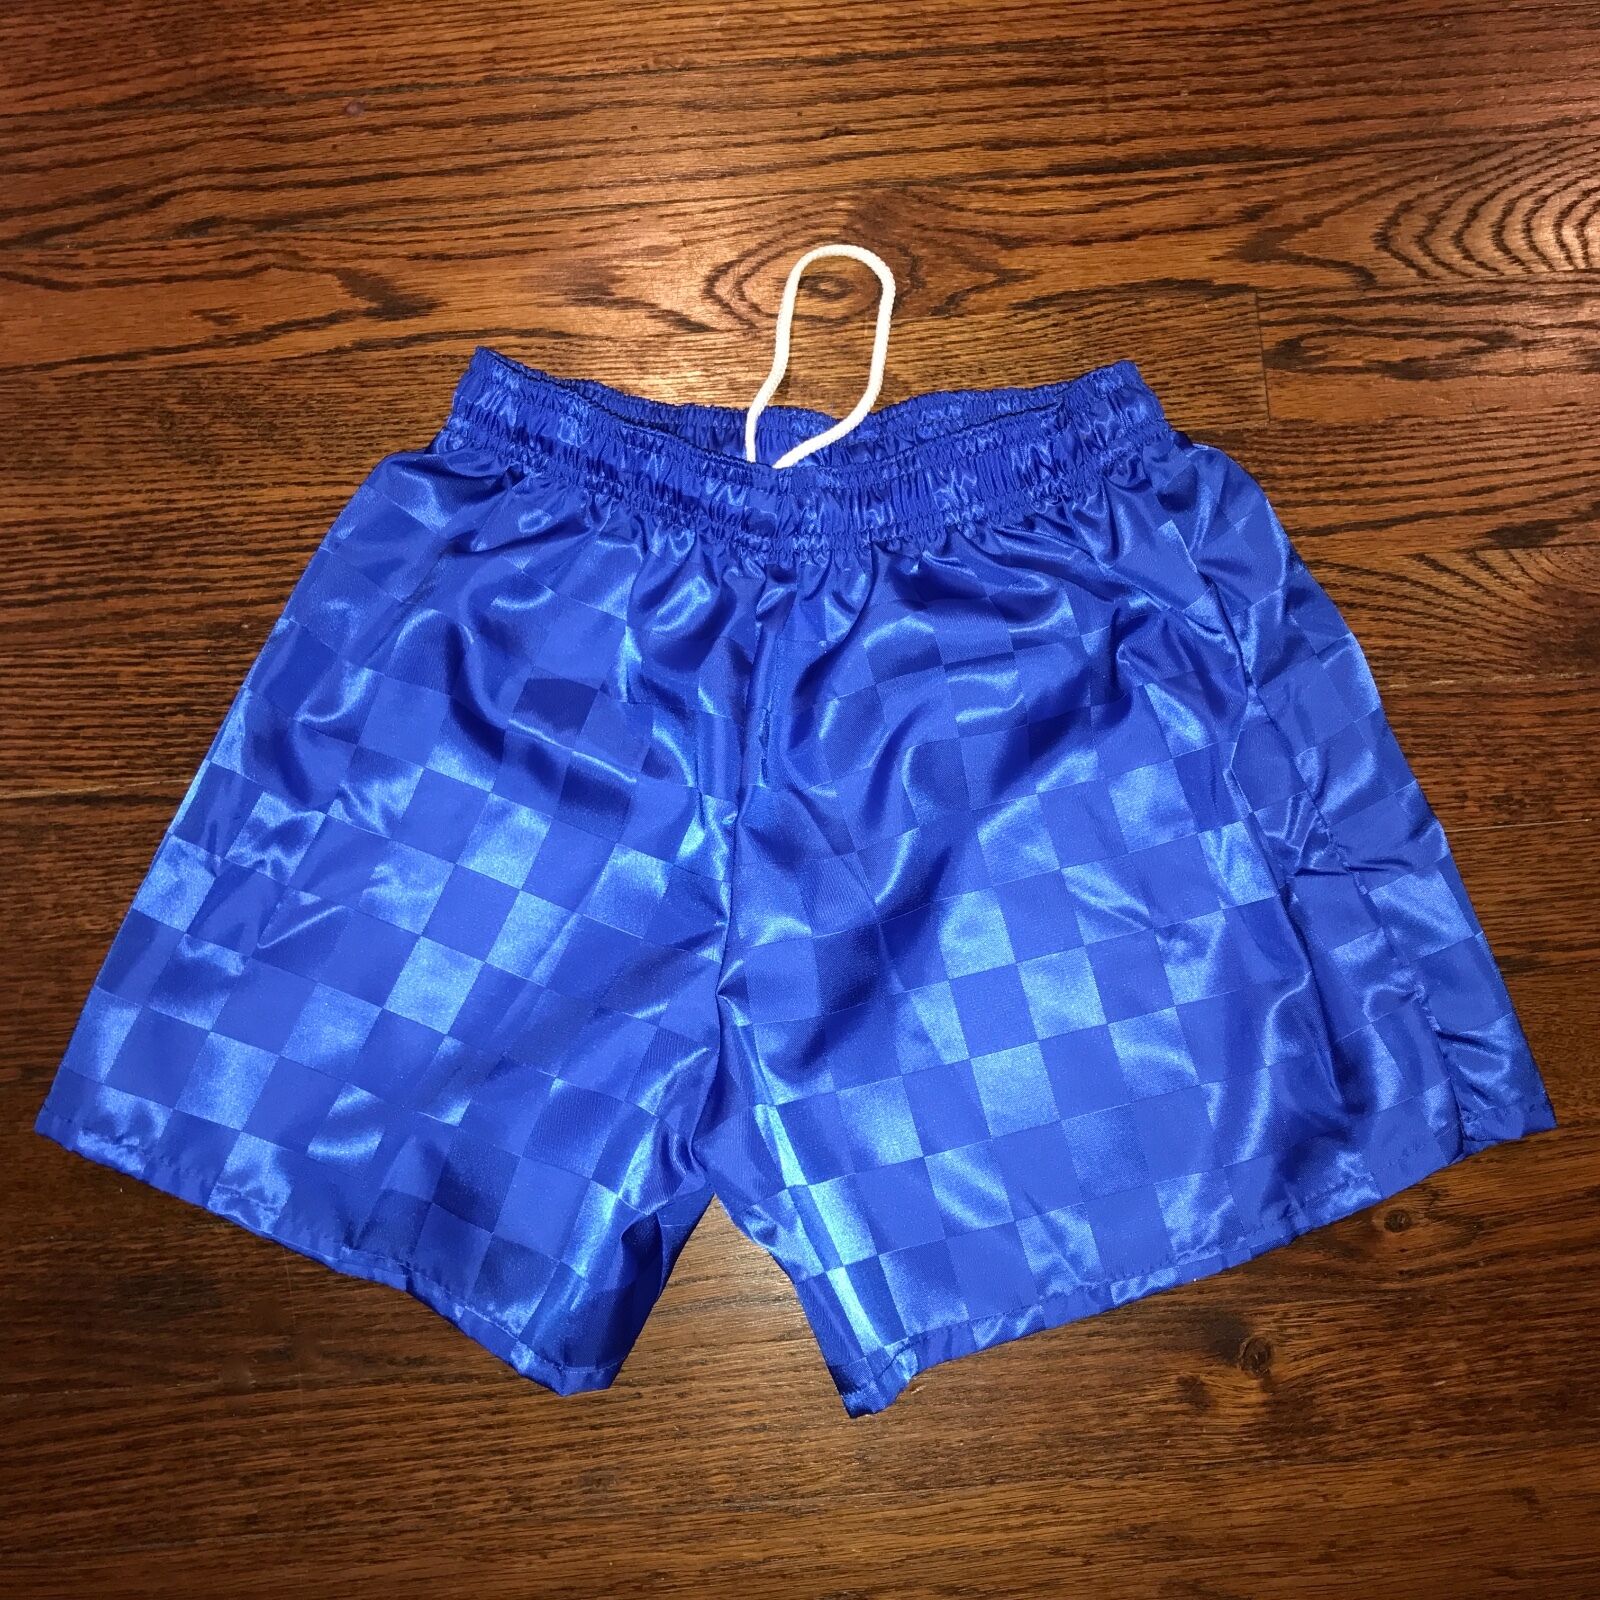 NEW Vtg 80s Soccer Shorts C.S. Blue CHECKERED Nylon 4